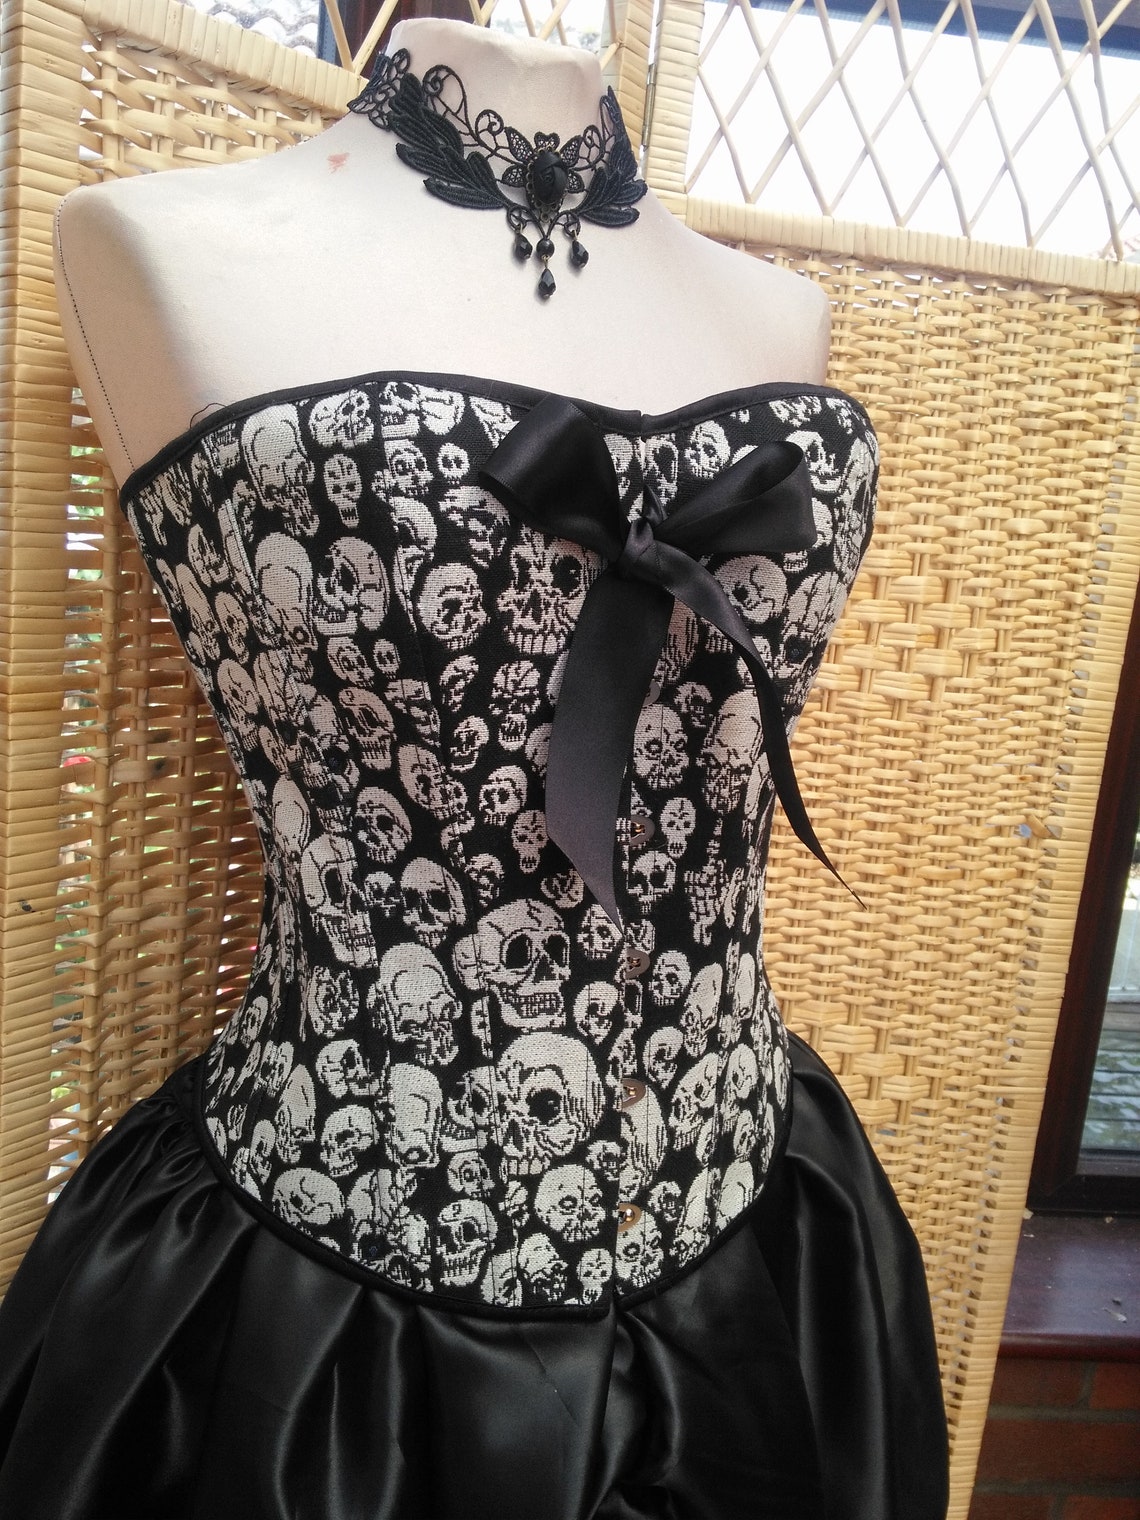 Skeleton Corset dress Halloween steampunk burlesque choker | Etsy